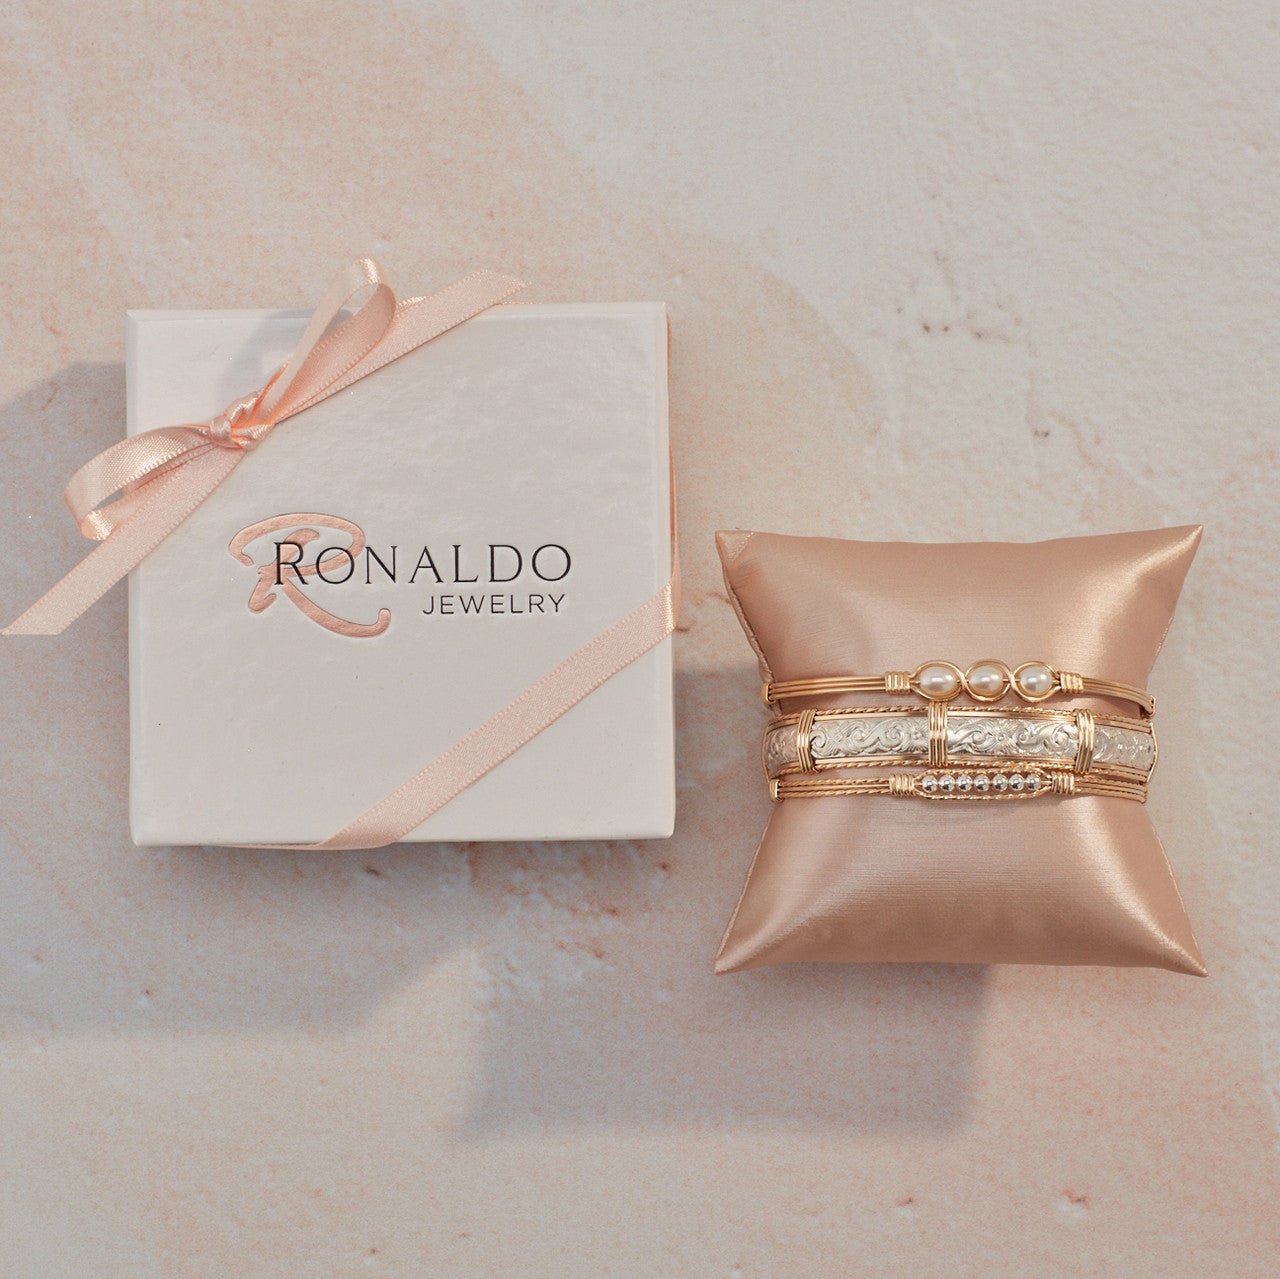 Ronaldo Designer Jewelry Inc